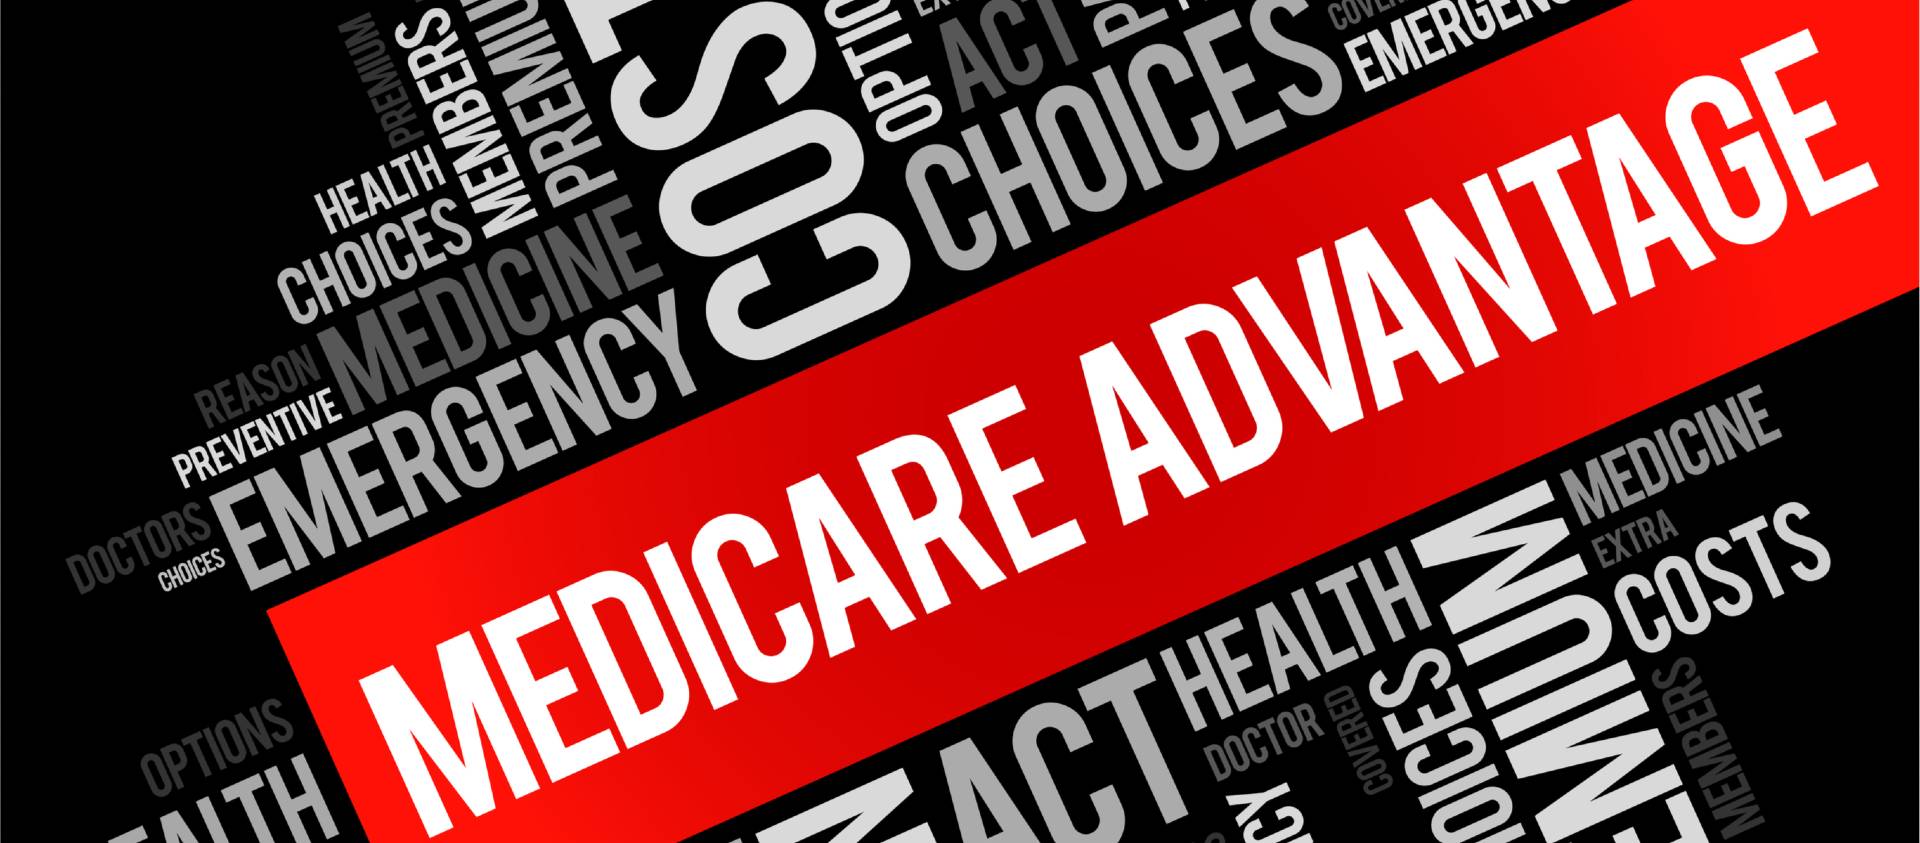 Medicare Advantage Mlr Rebates